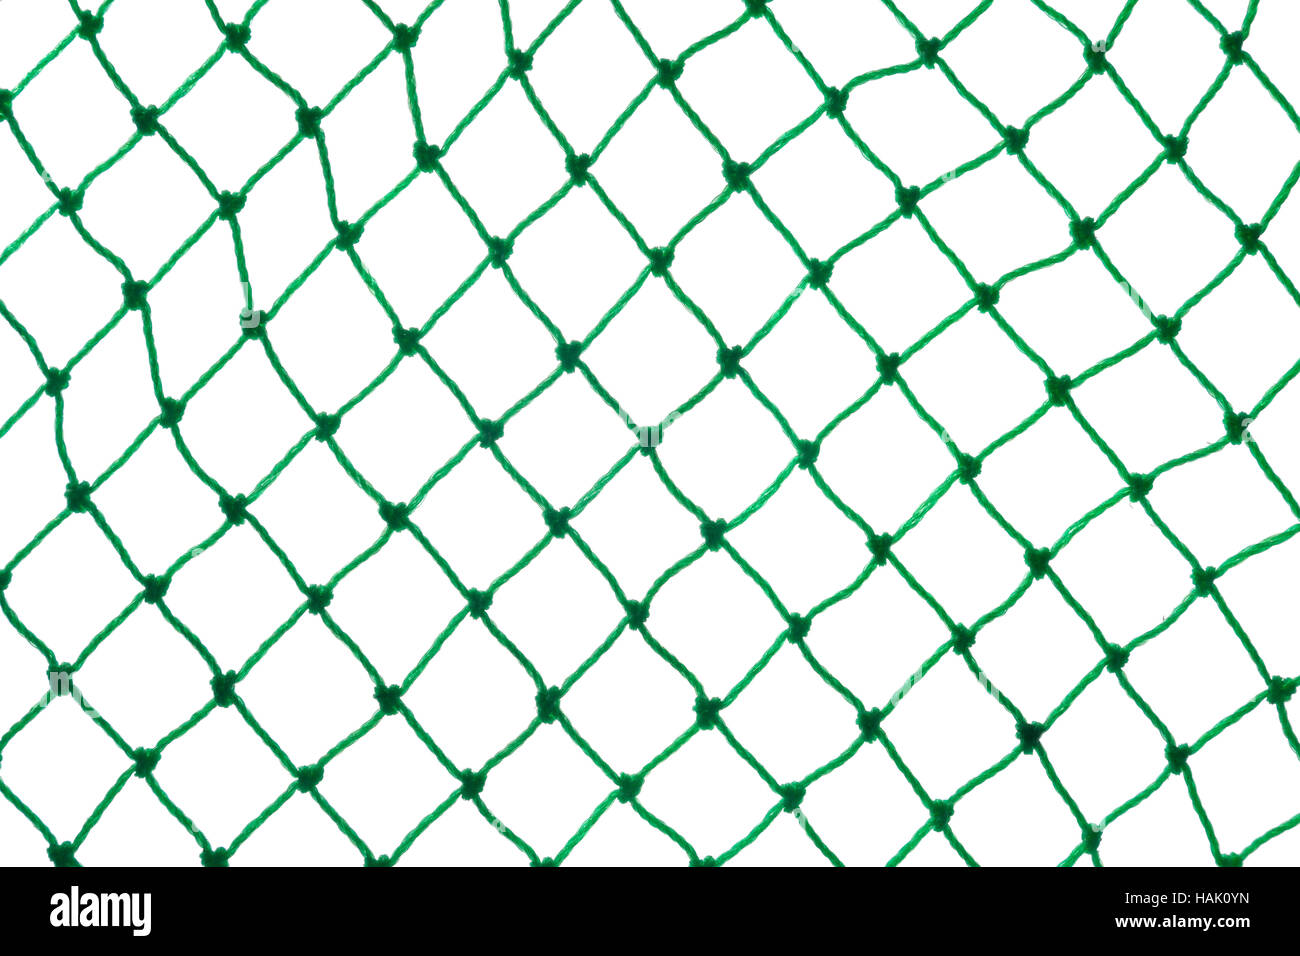 green net on white background Stock Photo